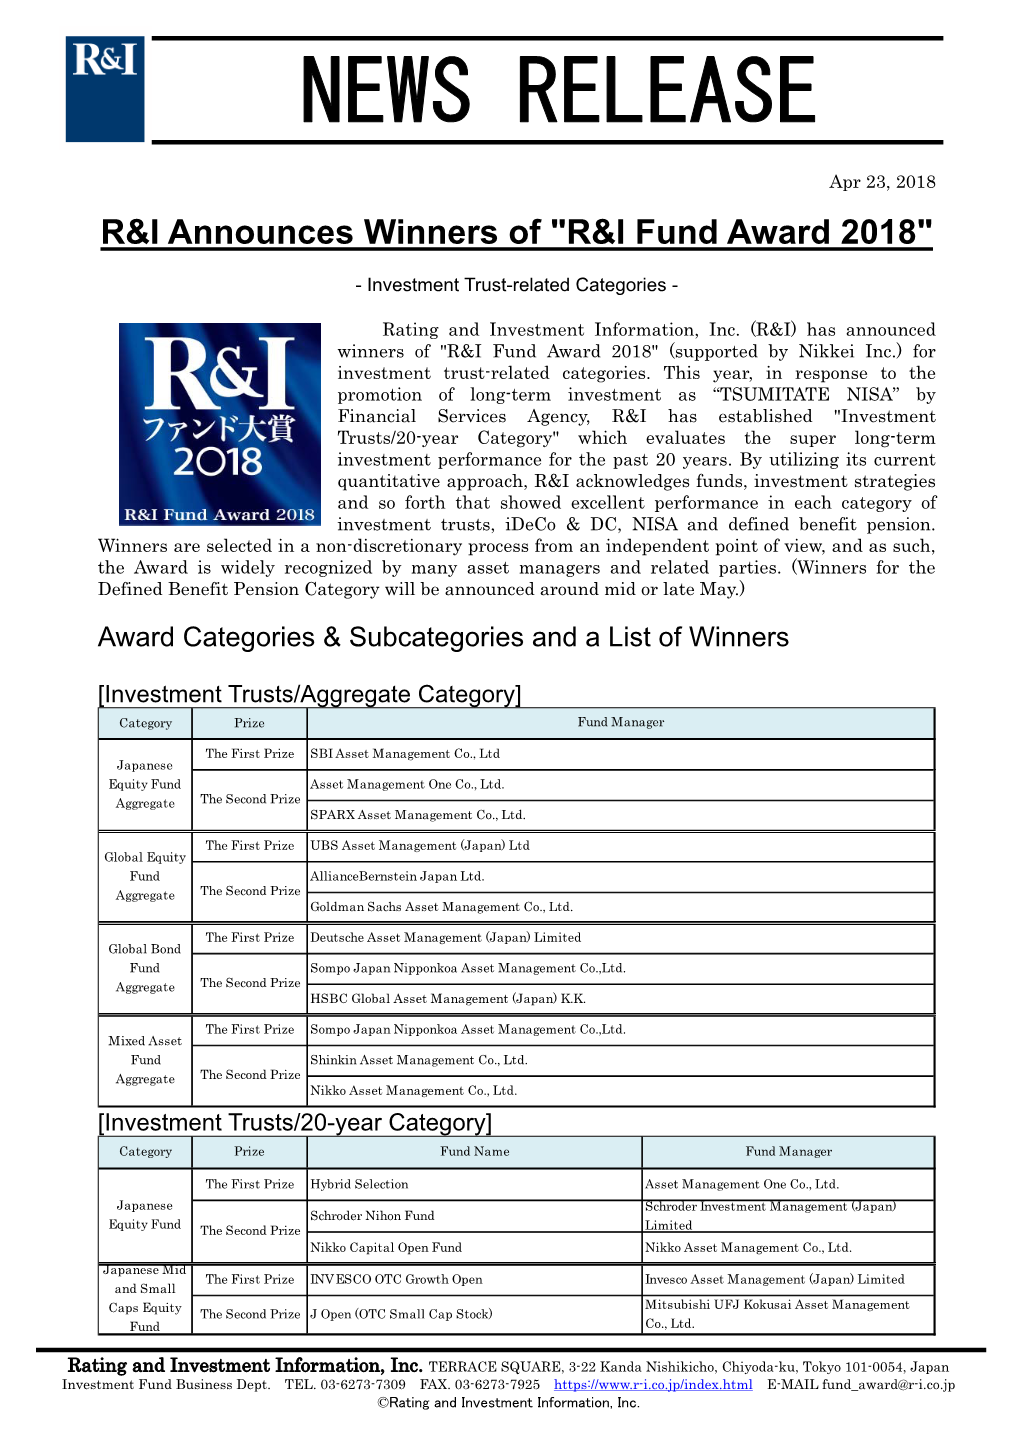 R&I Fund Award 2018